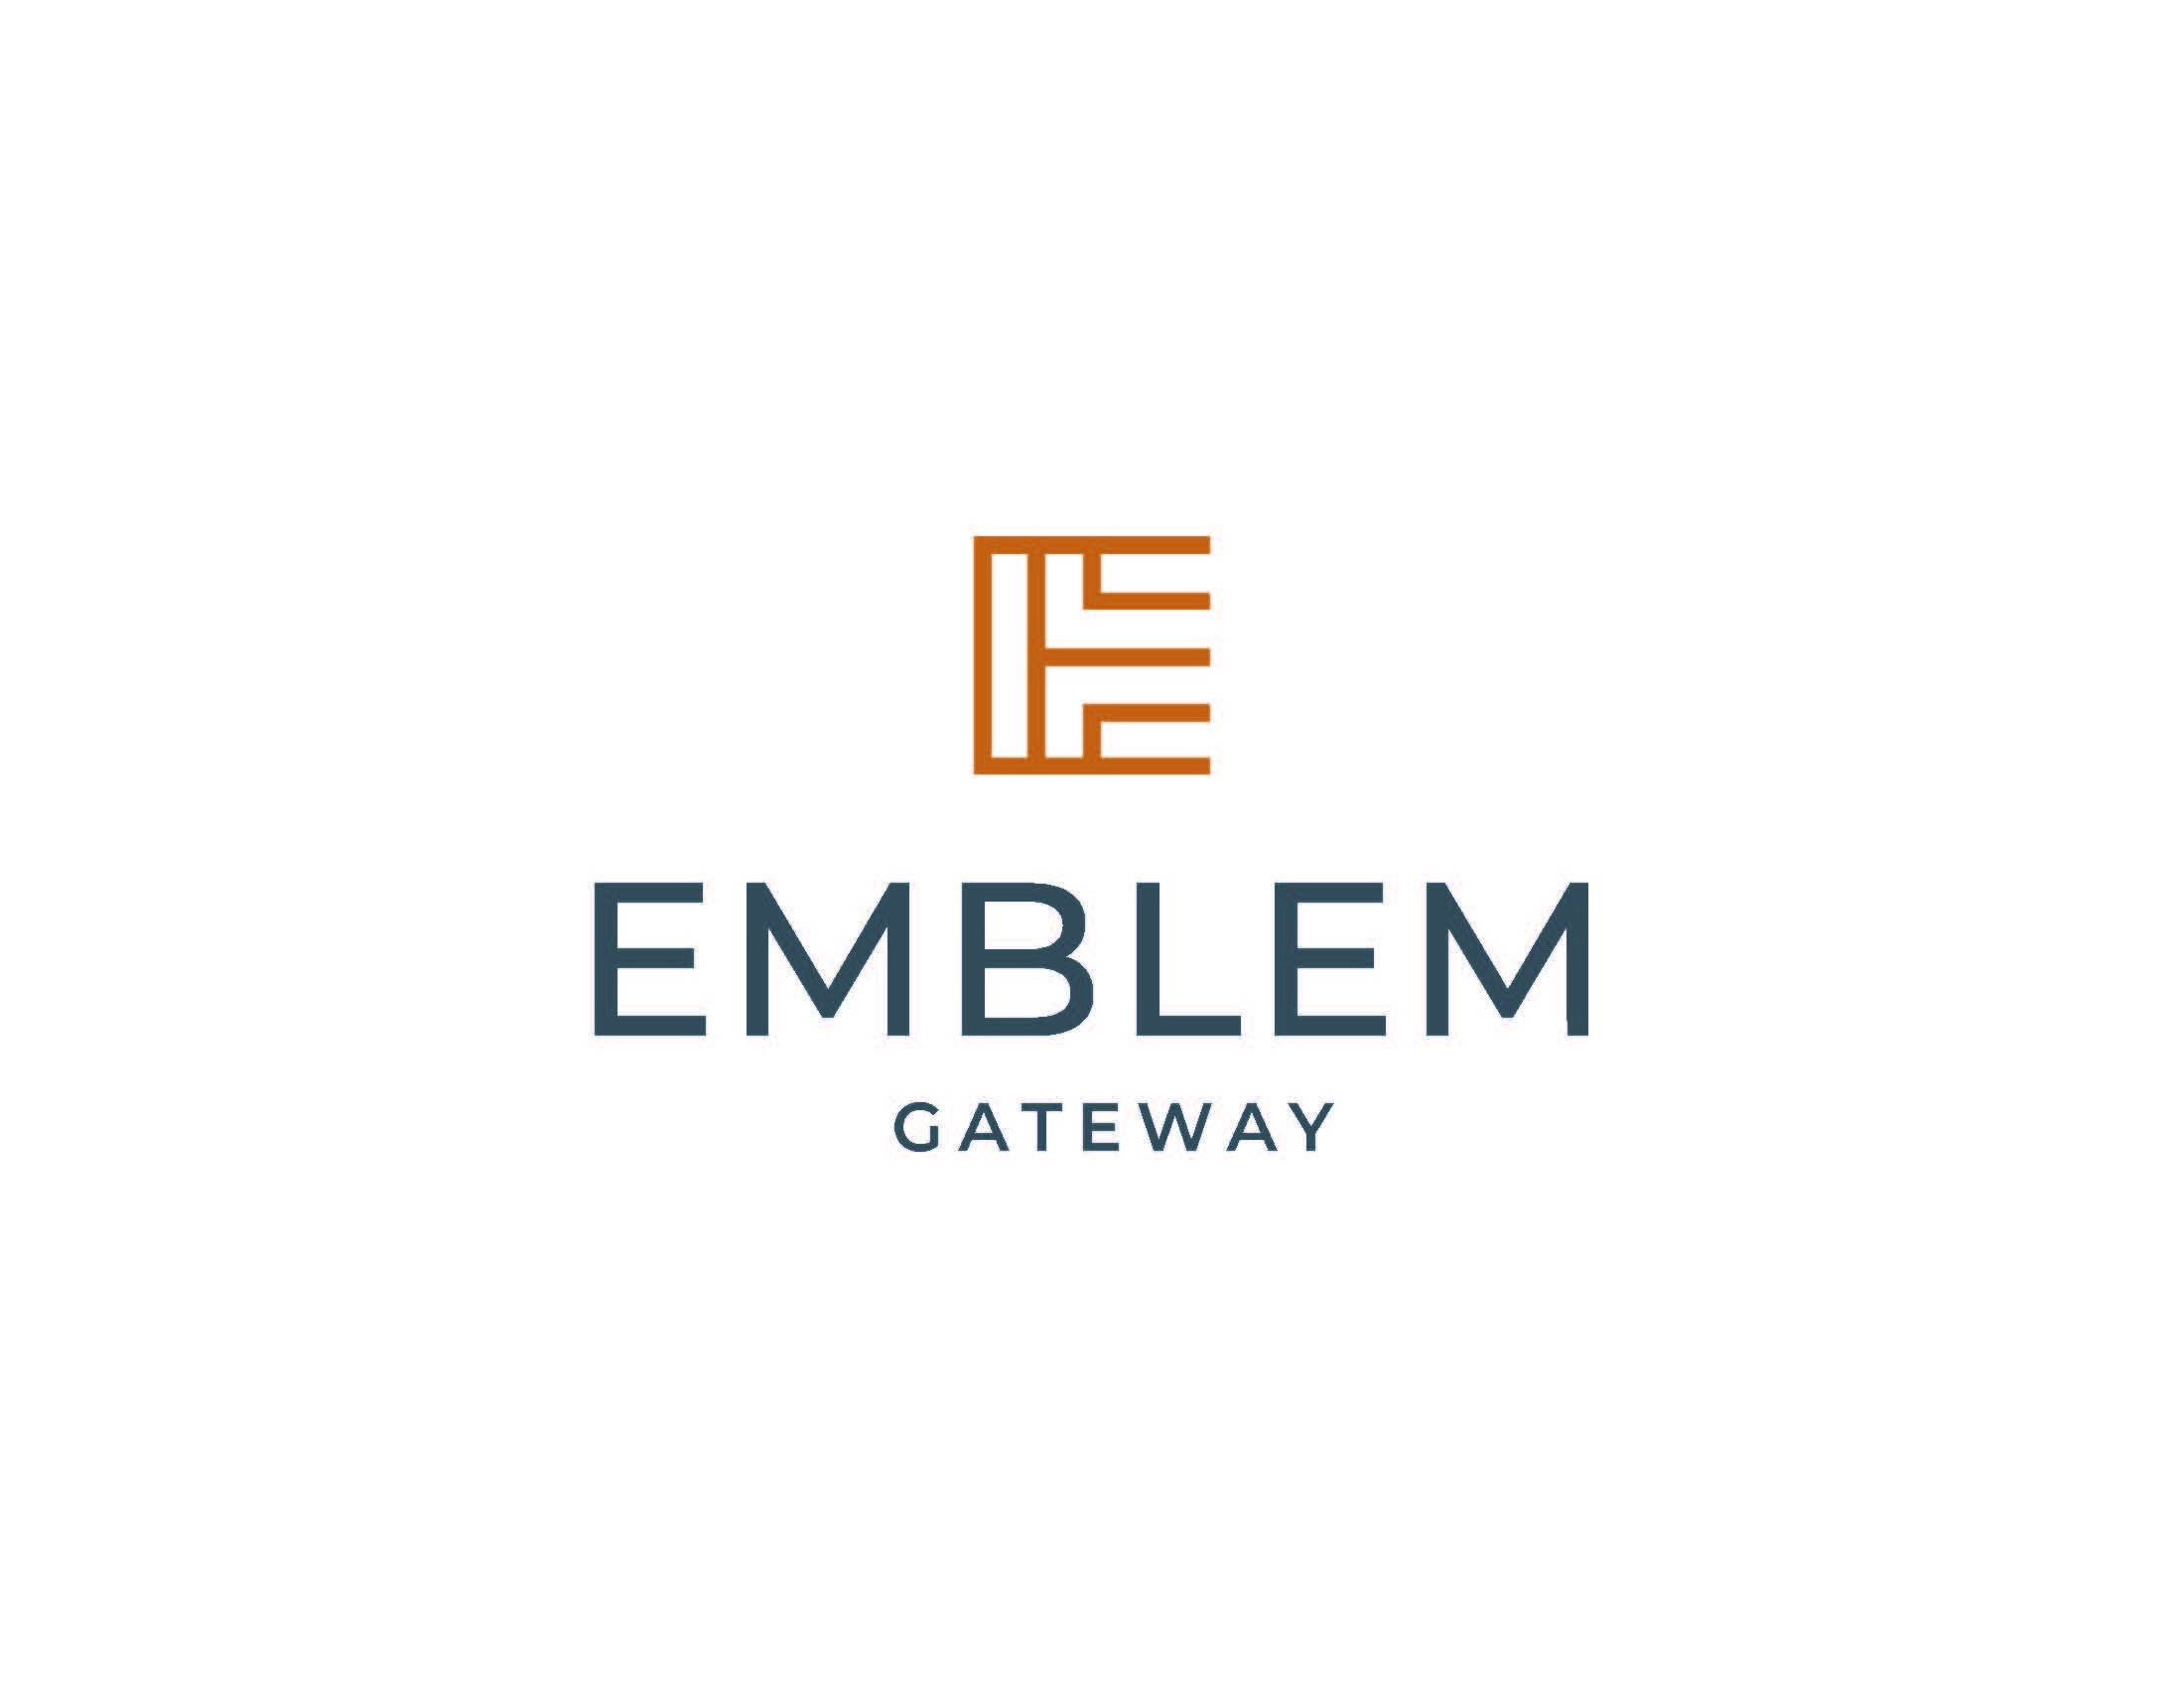 Emblem Gateway logo